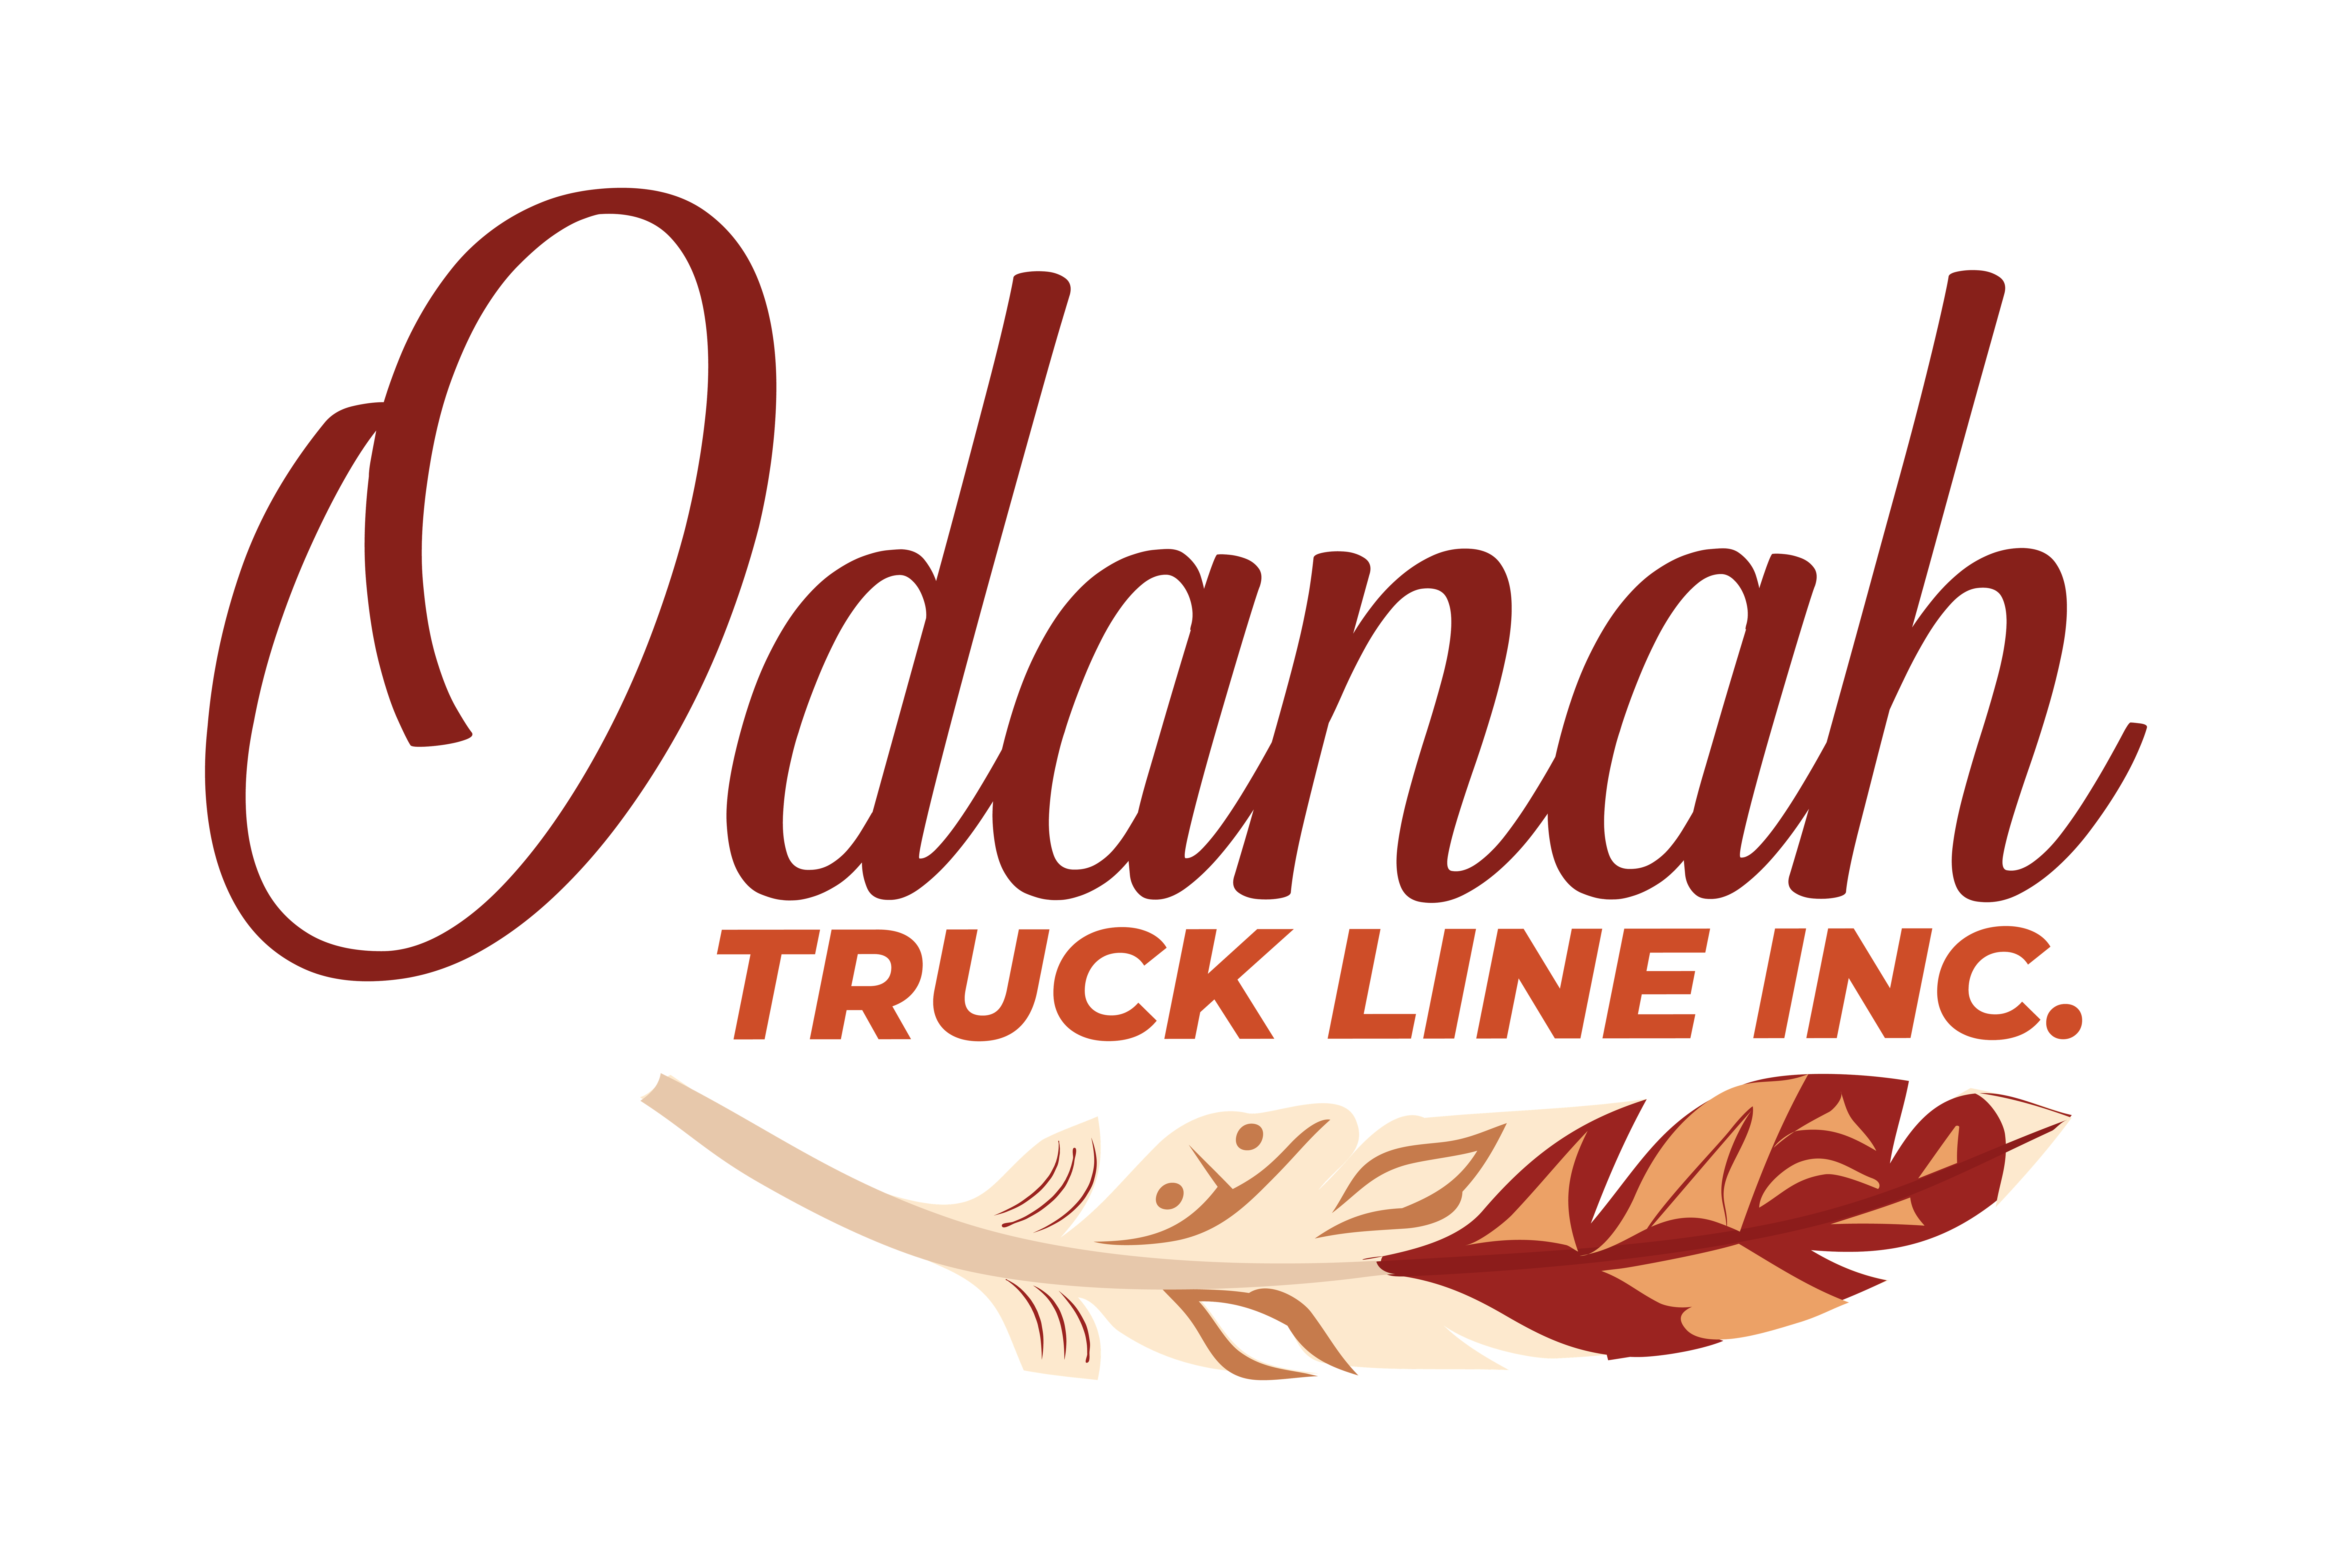 Odanah Truck Line Inc